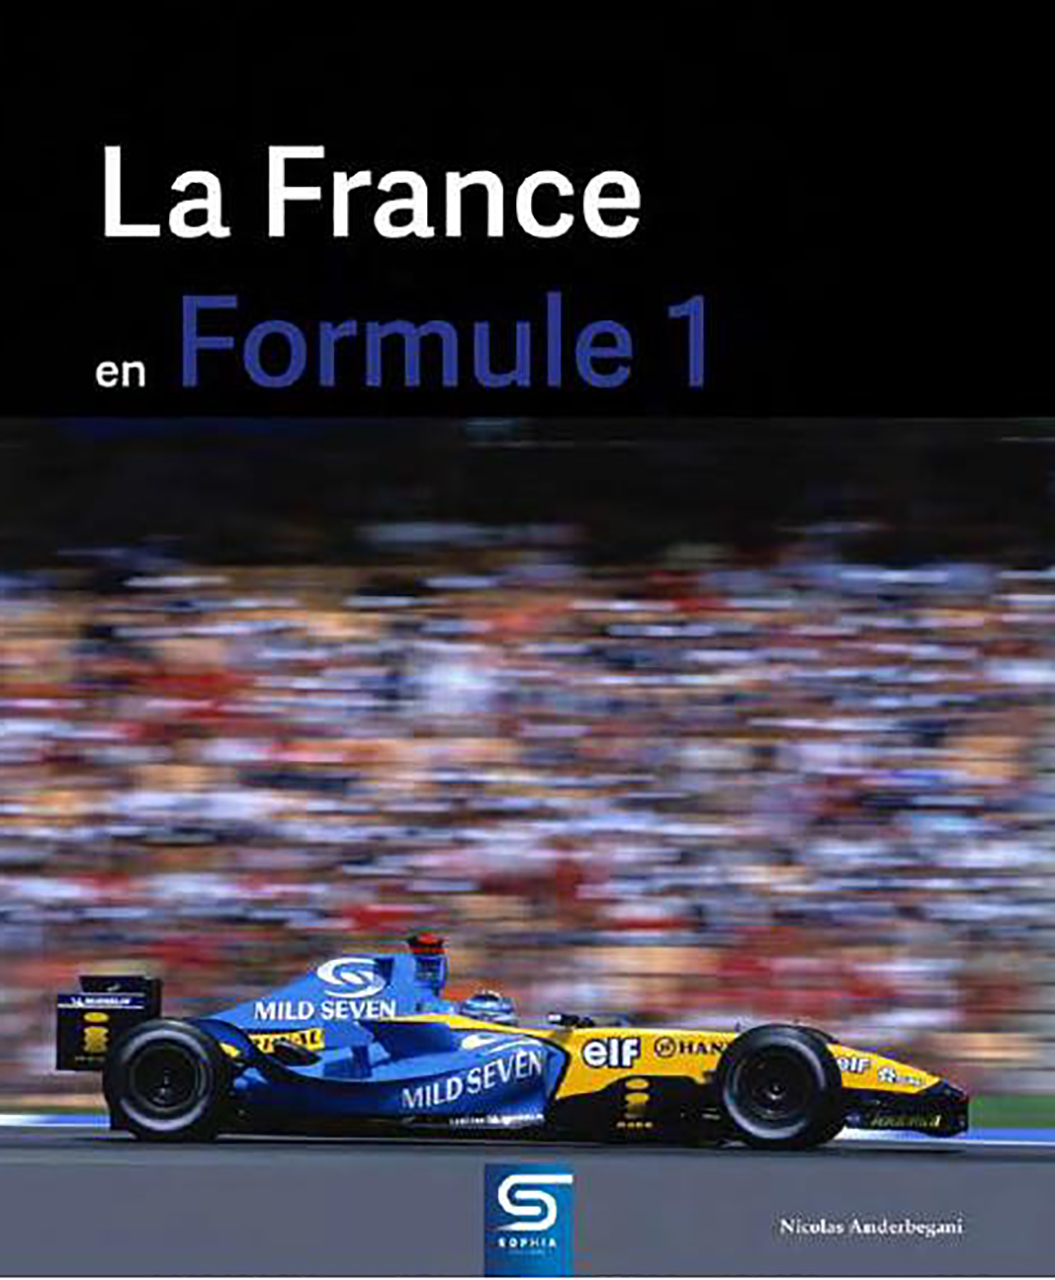 France en formule 1